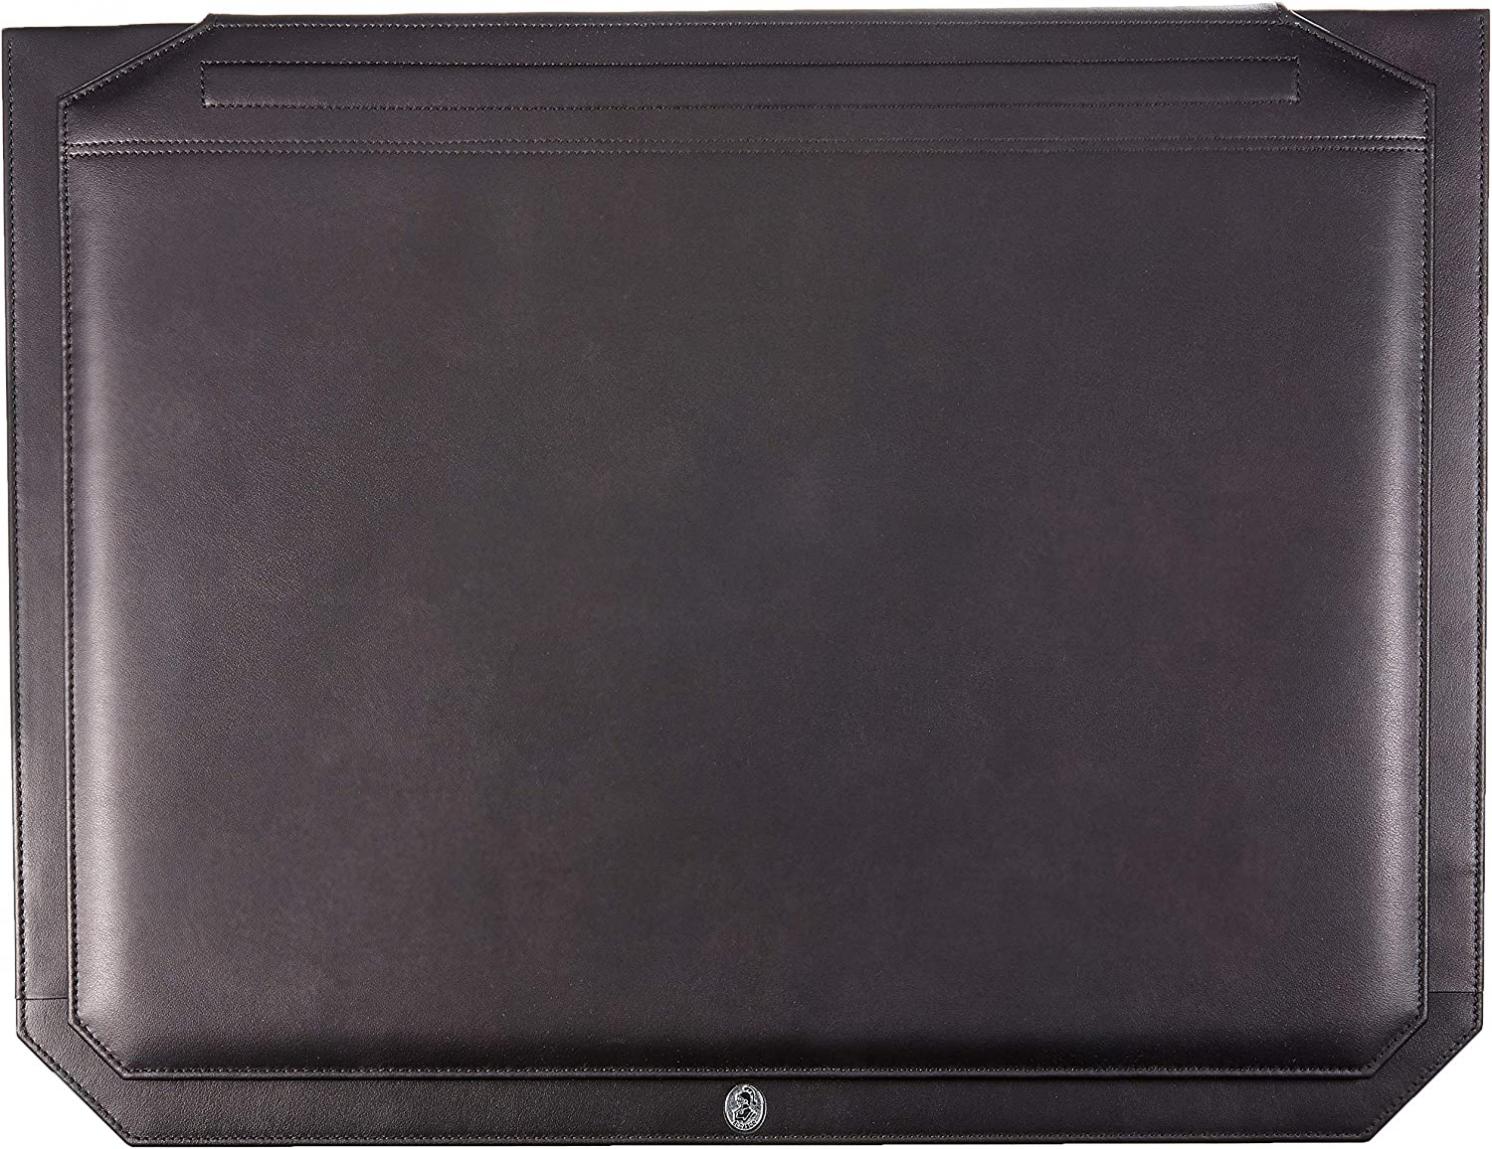 EL CASCO M740 Matt Leather Desk with Pocket - Black